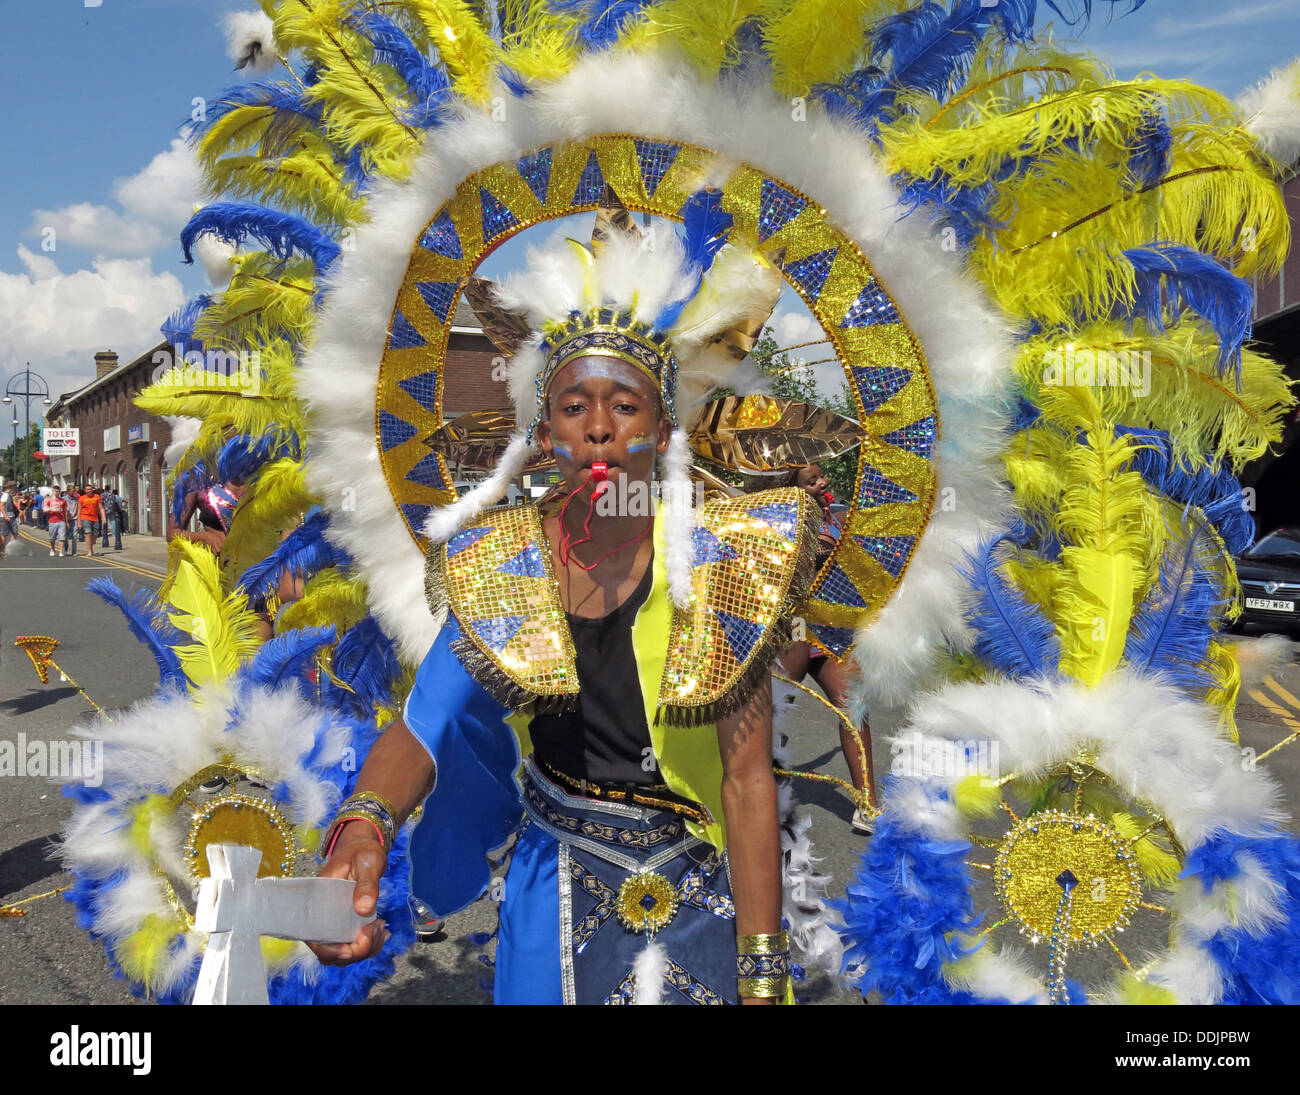 Costume ballerino in blu giallo da Huddersfield Carnevale 2013 Caraibi africani parade street party Foto Stock